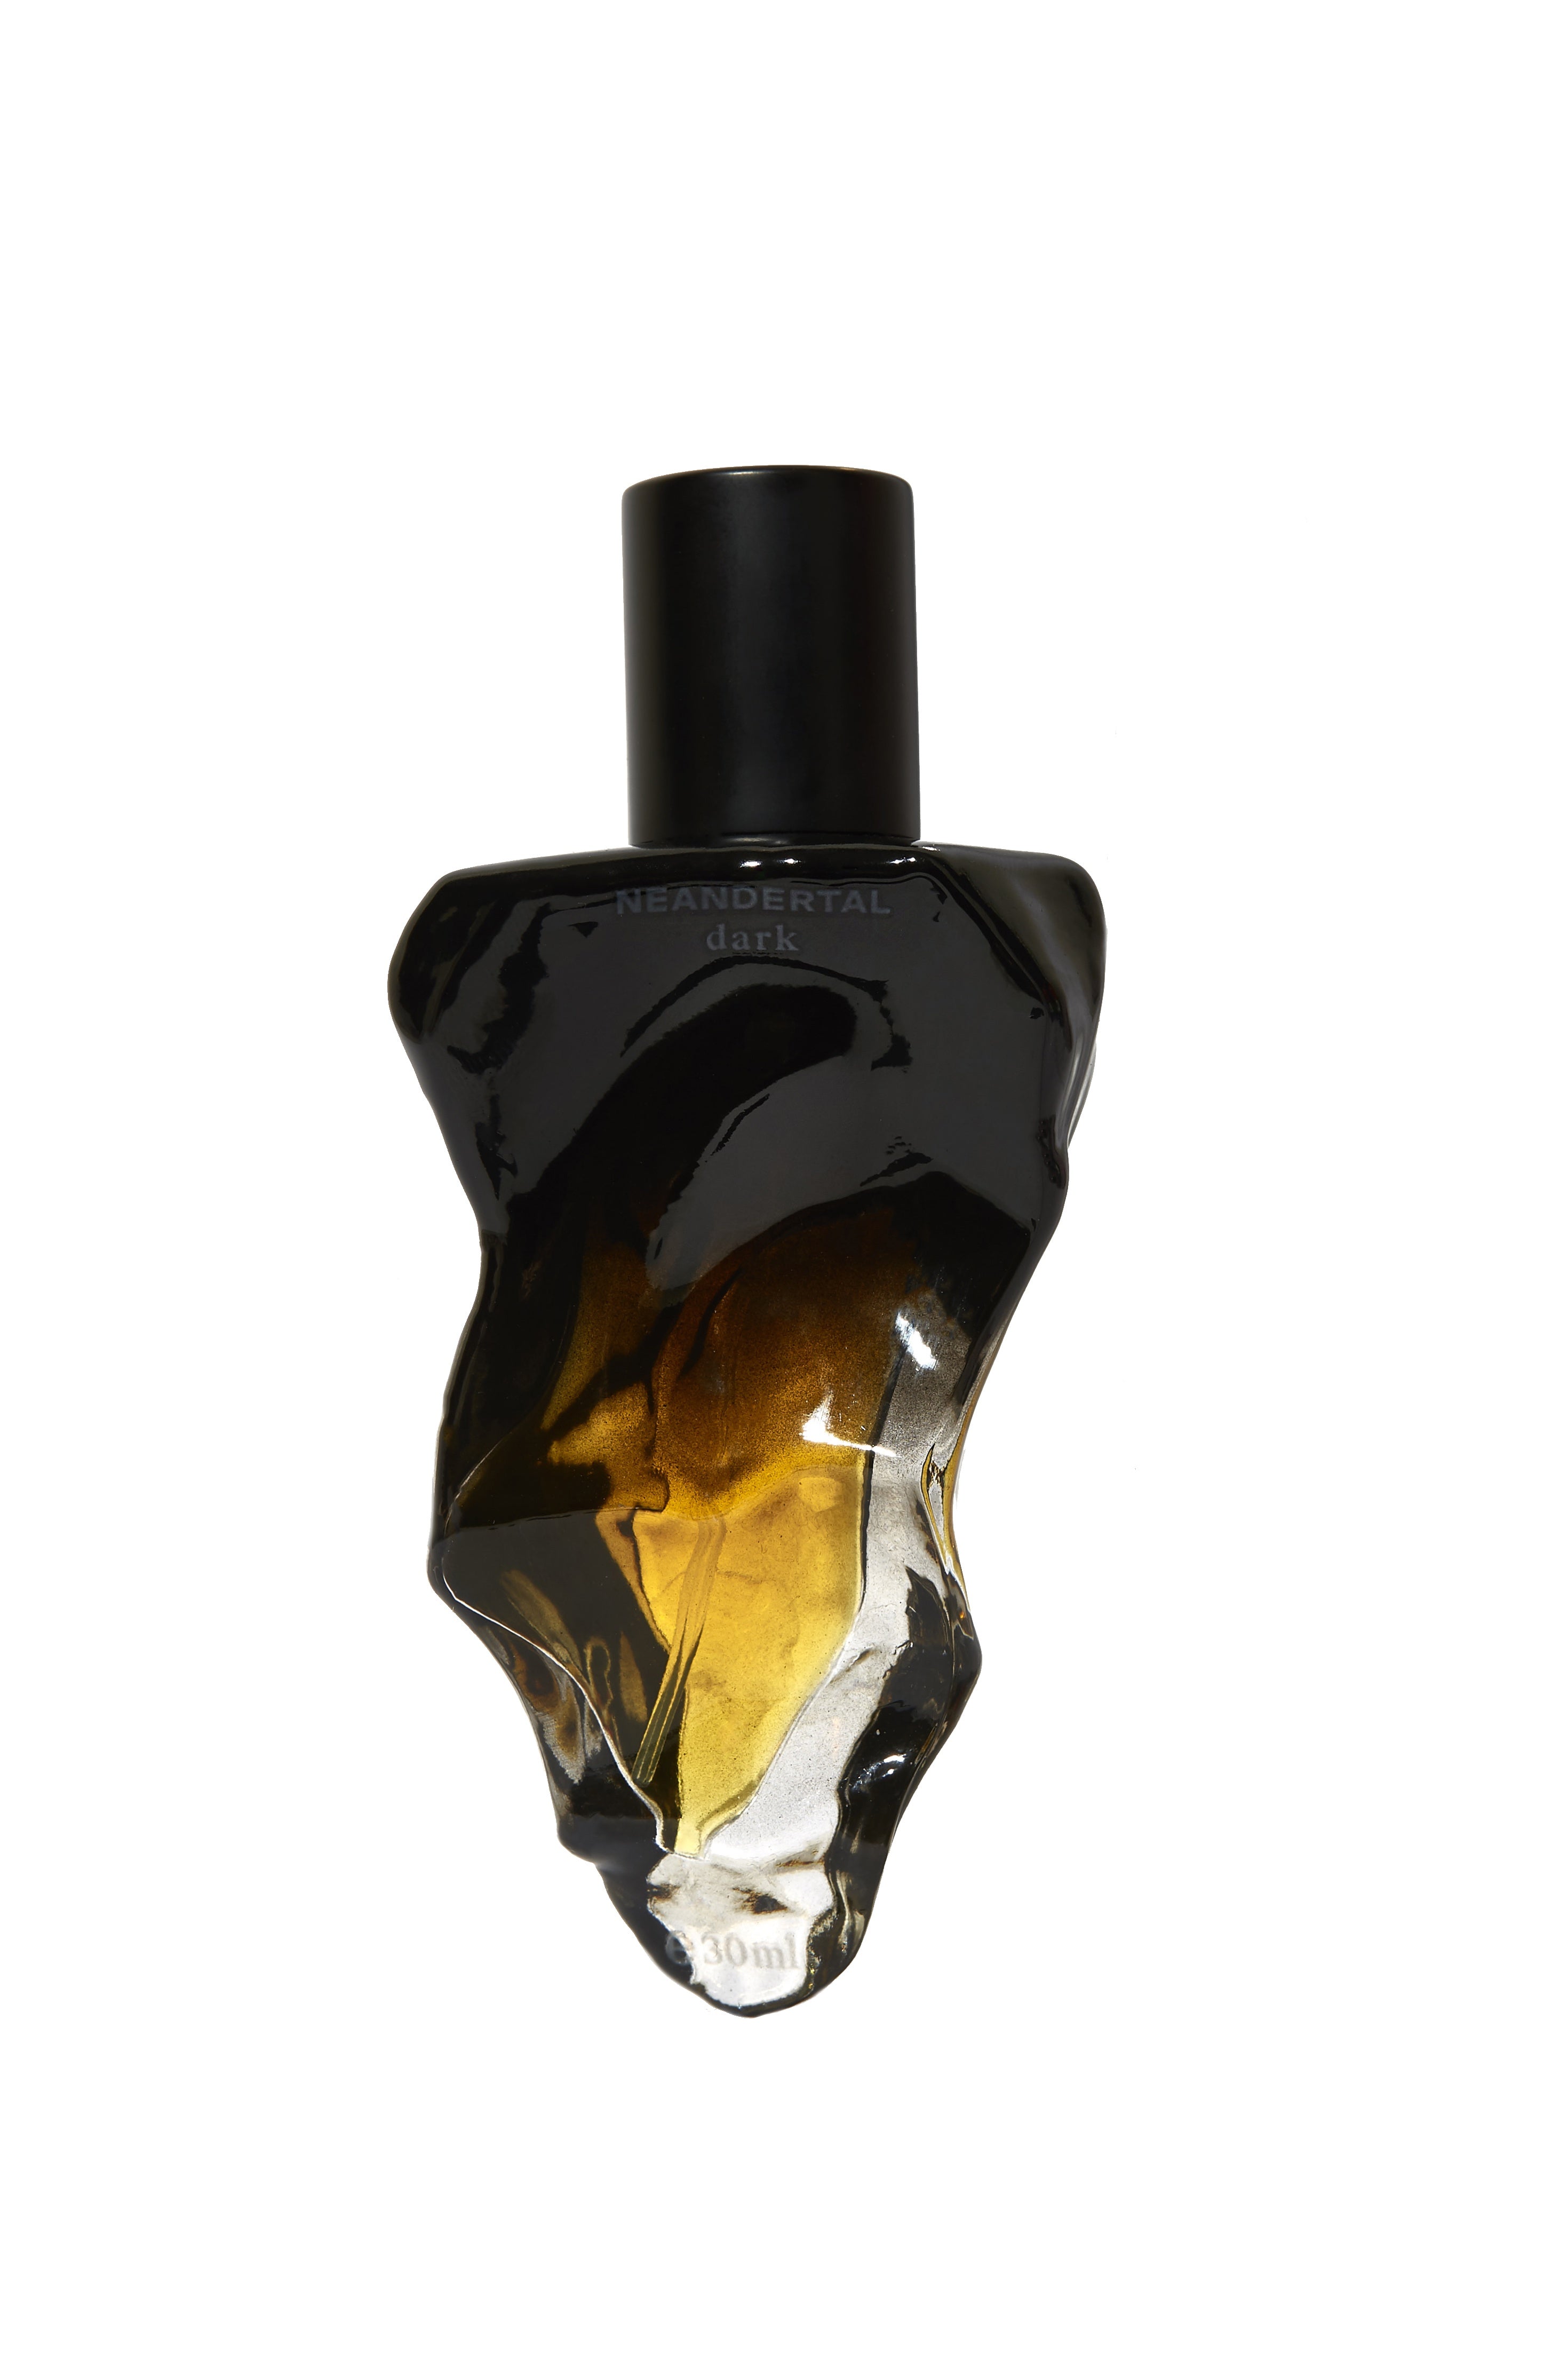 Neandertal Dark Perfume 30ml